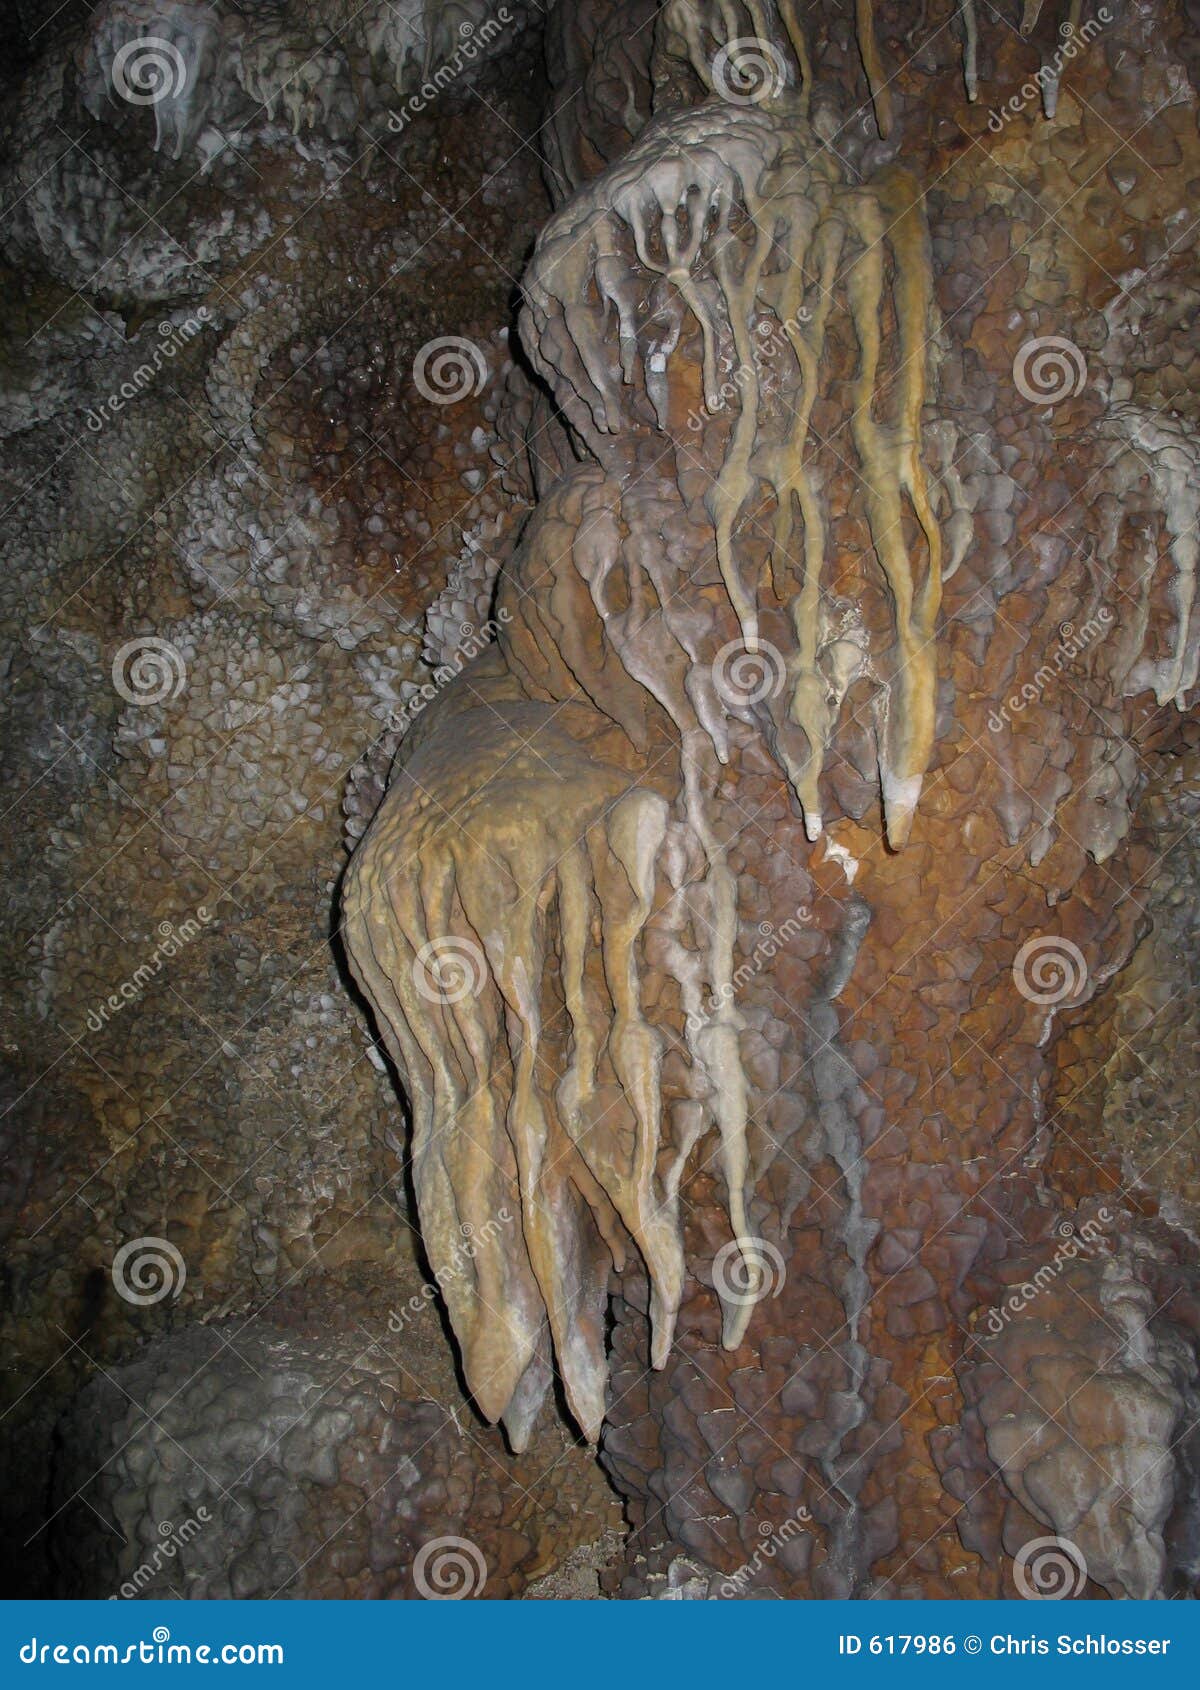 jewel cave stalactites